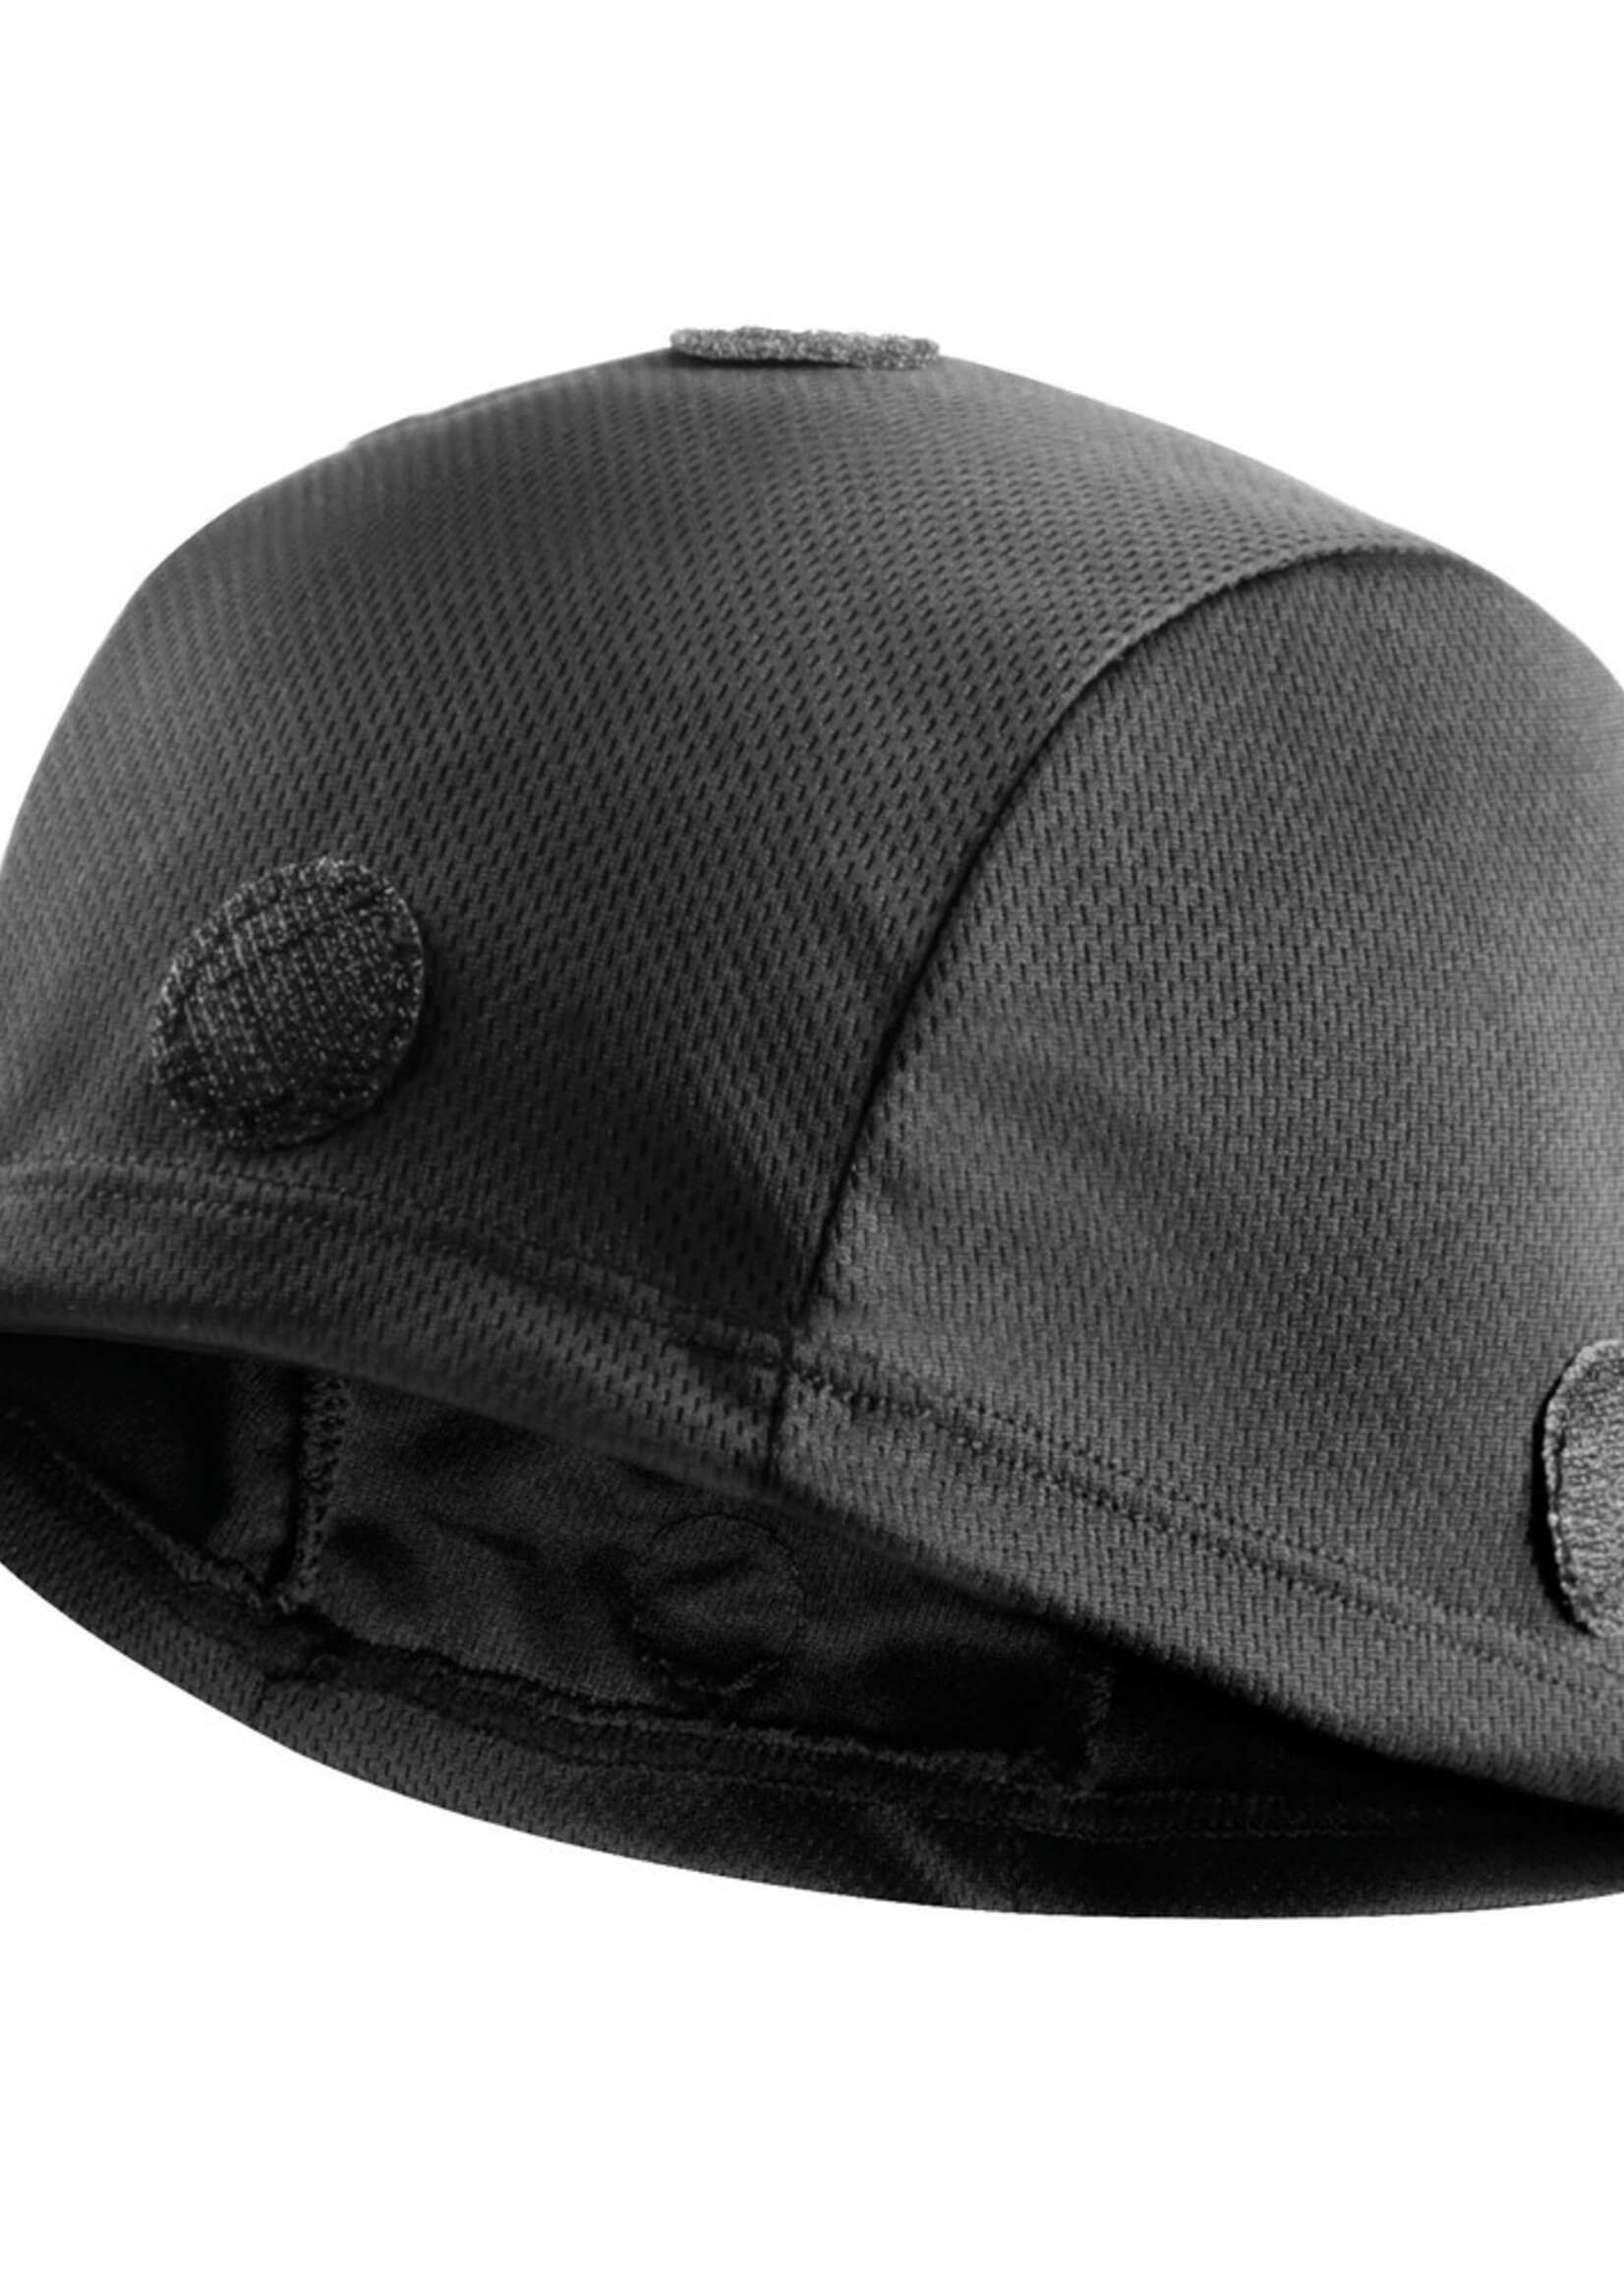 Lampa Head-Cap, polyester head-cap for helmet use